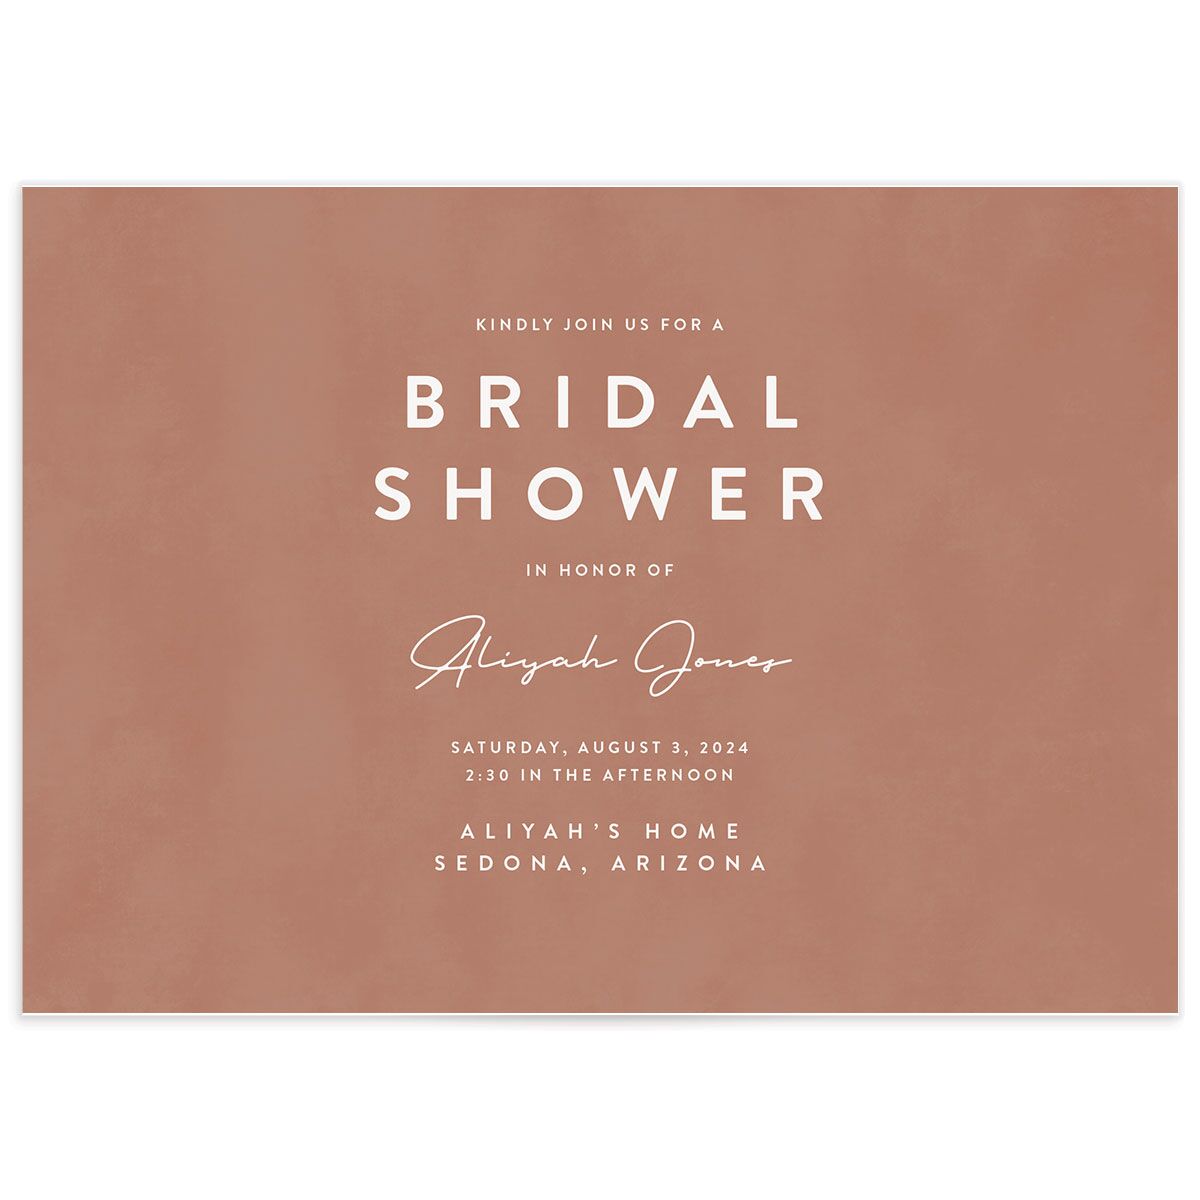 Abstract Hills Bridal Shower Invitations